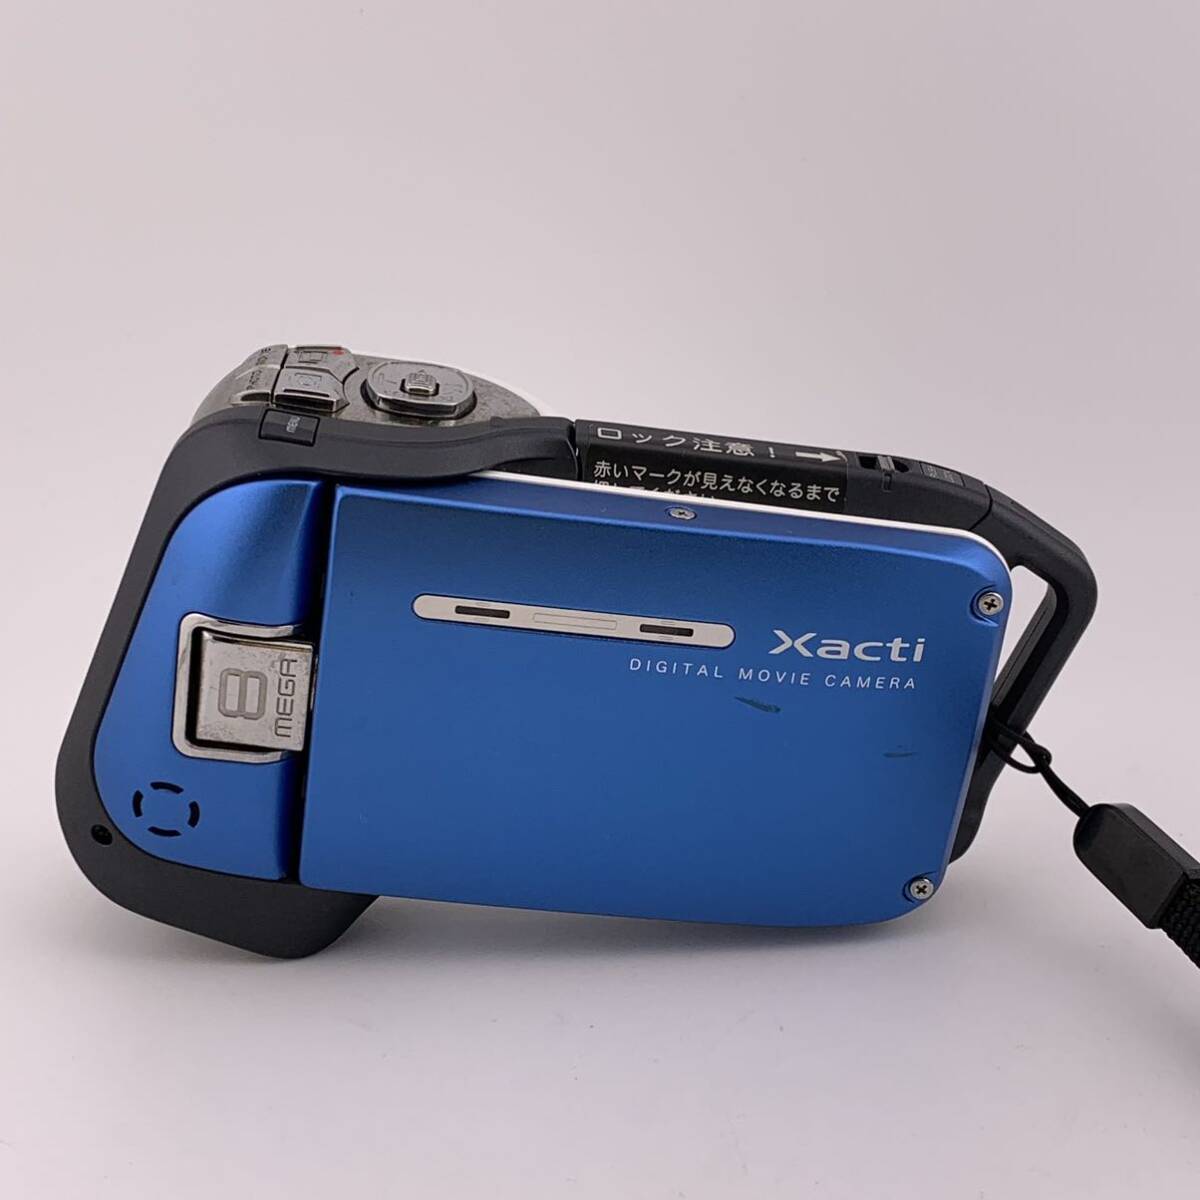 SANYO WATERPROOF Xacti DIGITAL MOVIE CAMERA blue battery * electrification * operation not yet verification [S81269-696]